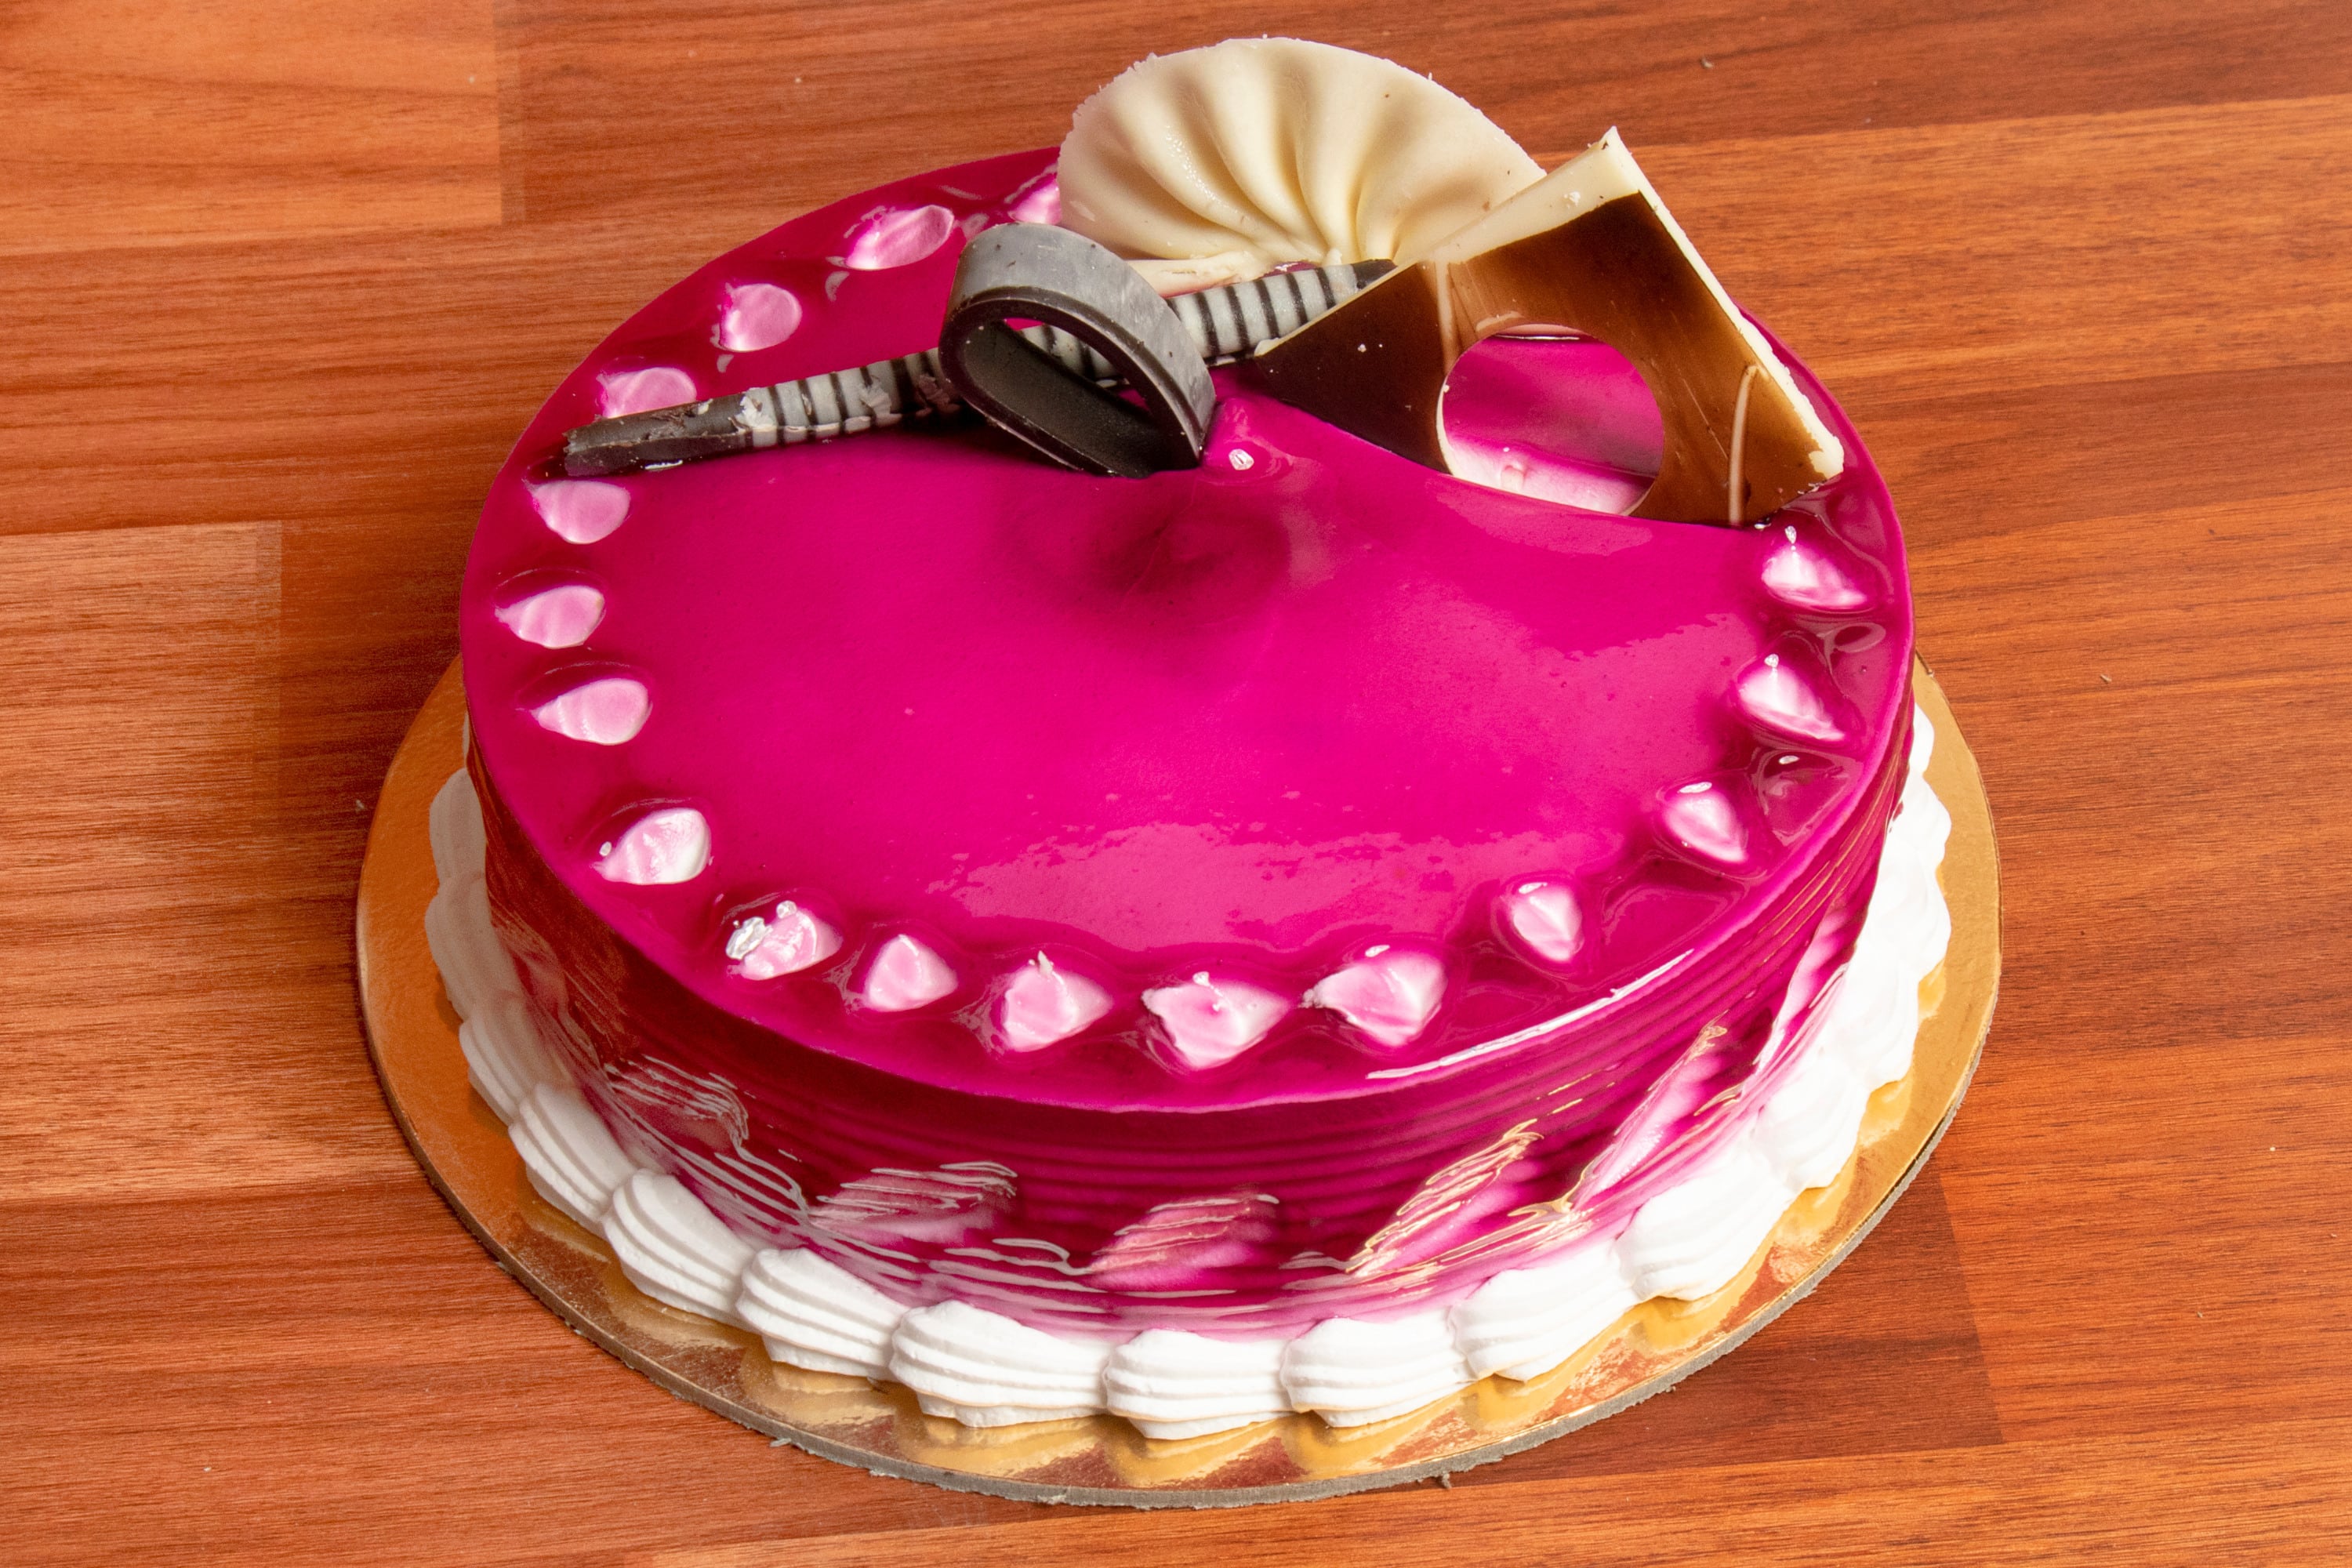 7th Heaven Cake Shop Mangalore. - Chocolate mousse cake | Facebook